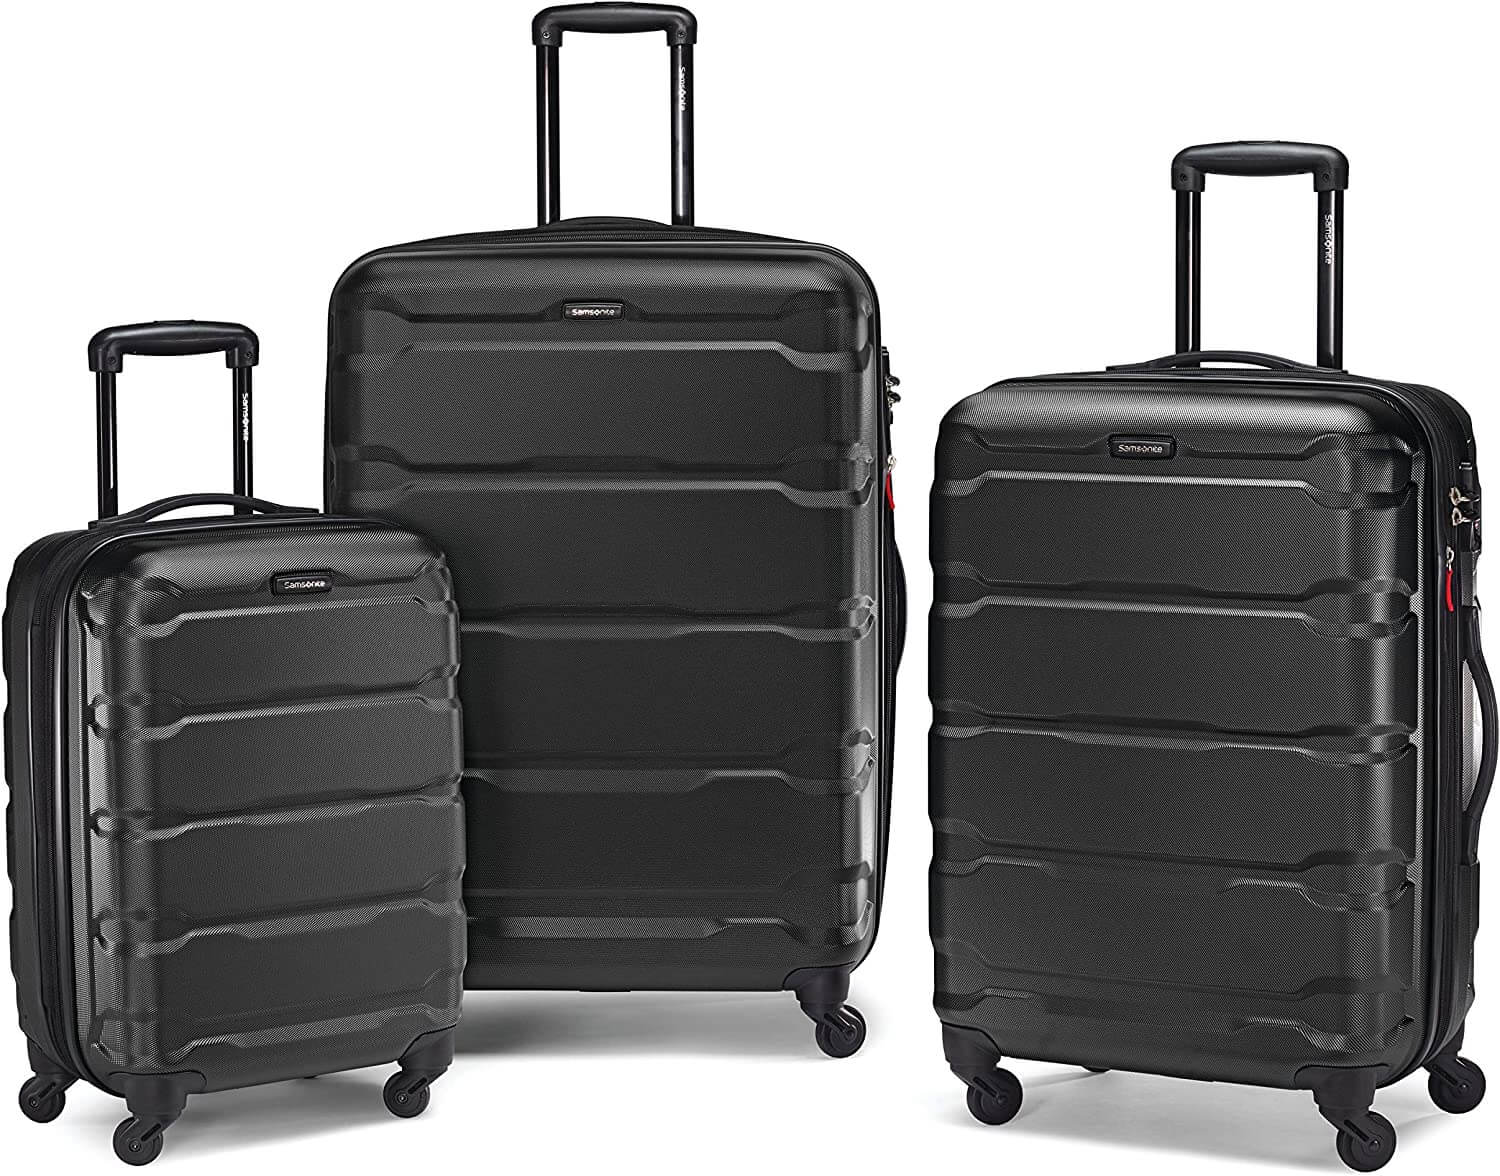 Samsonite Omni PC 3-Piece Hardside Luggage Sets